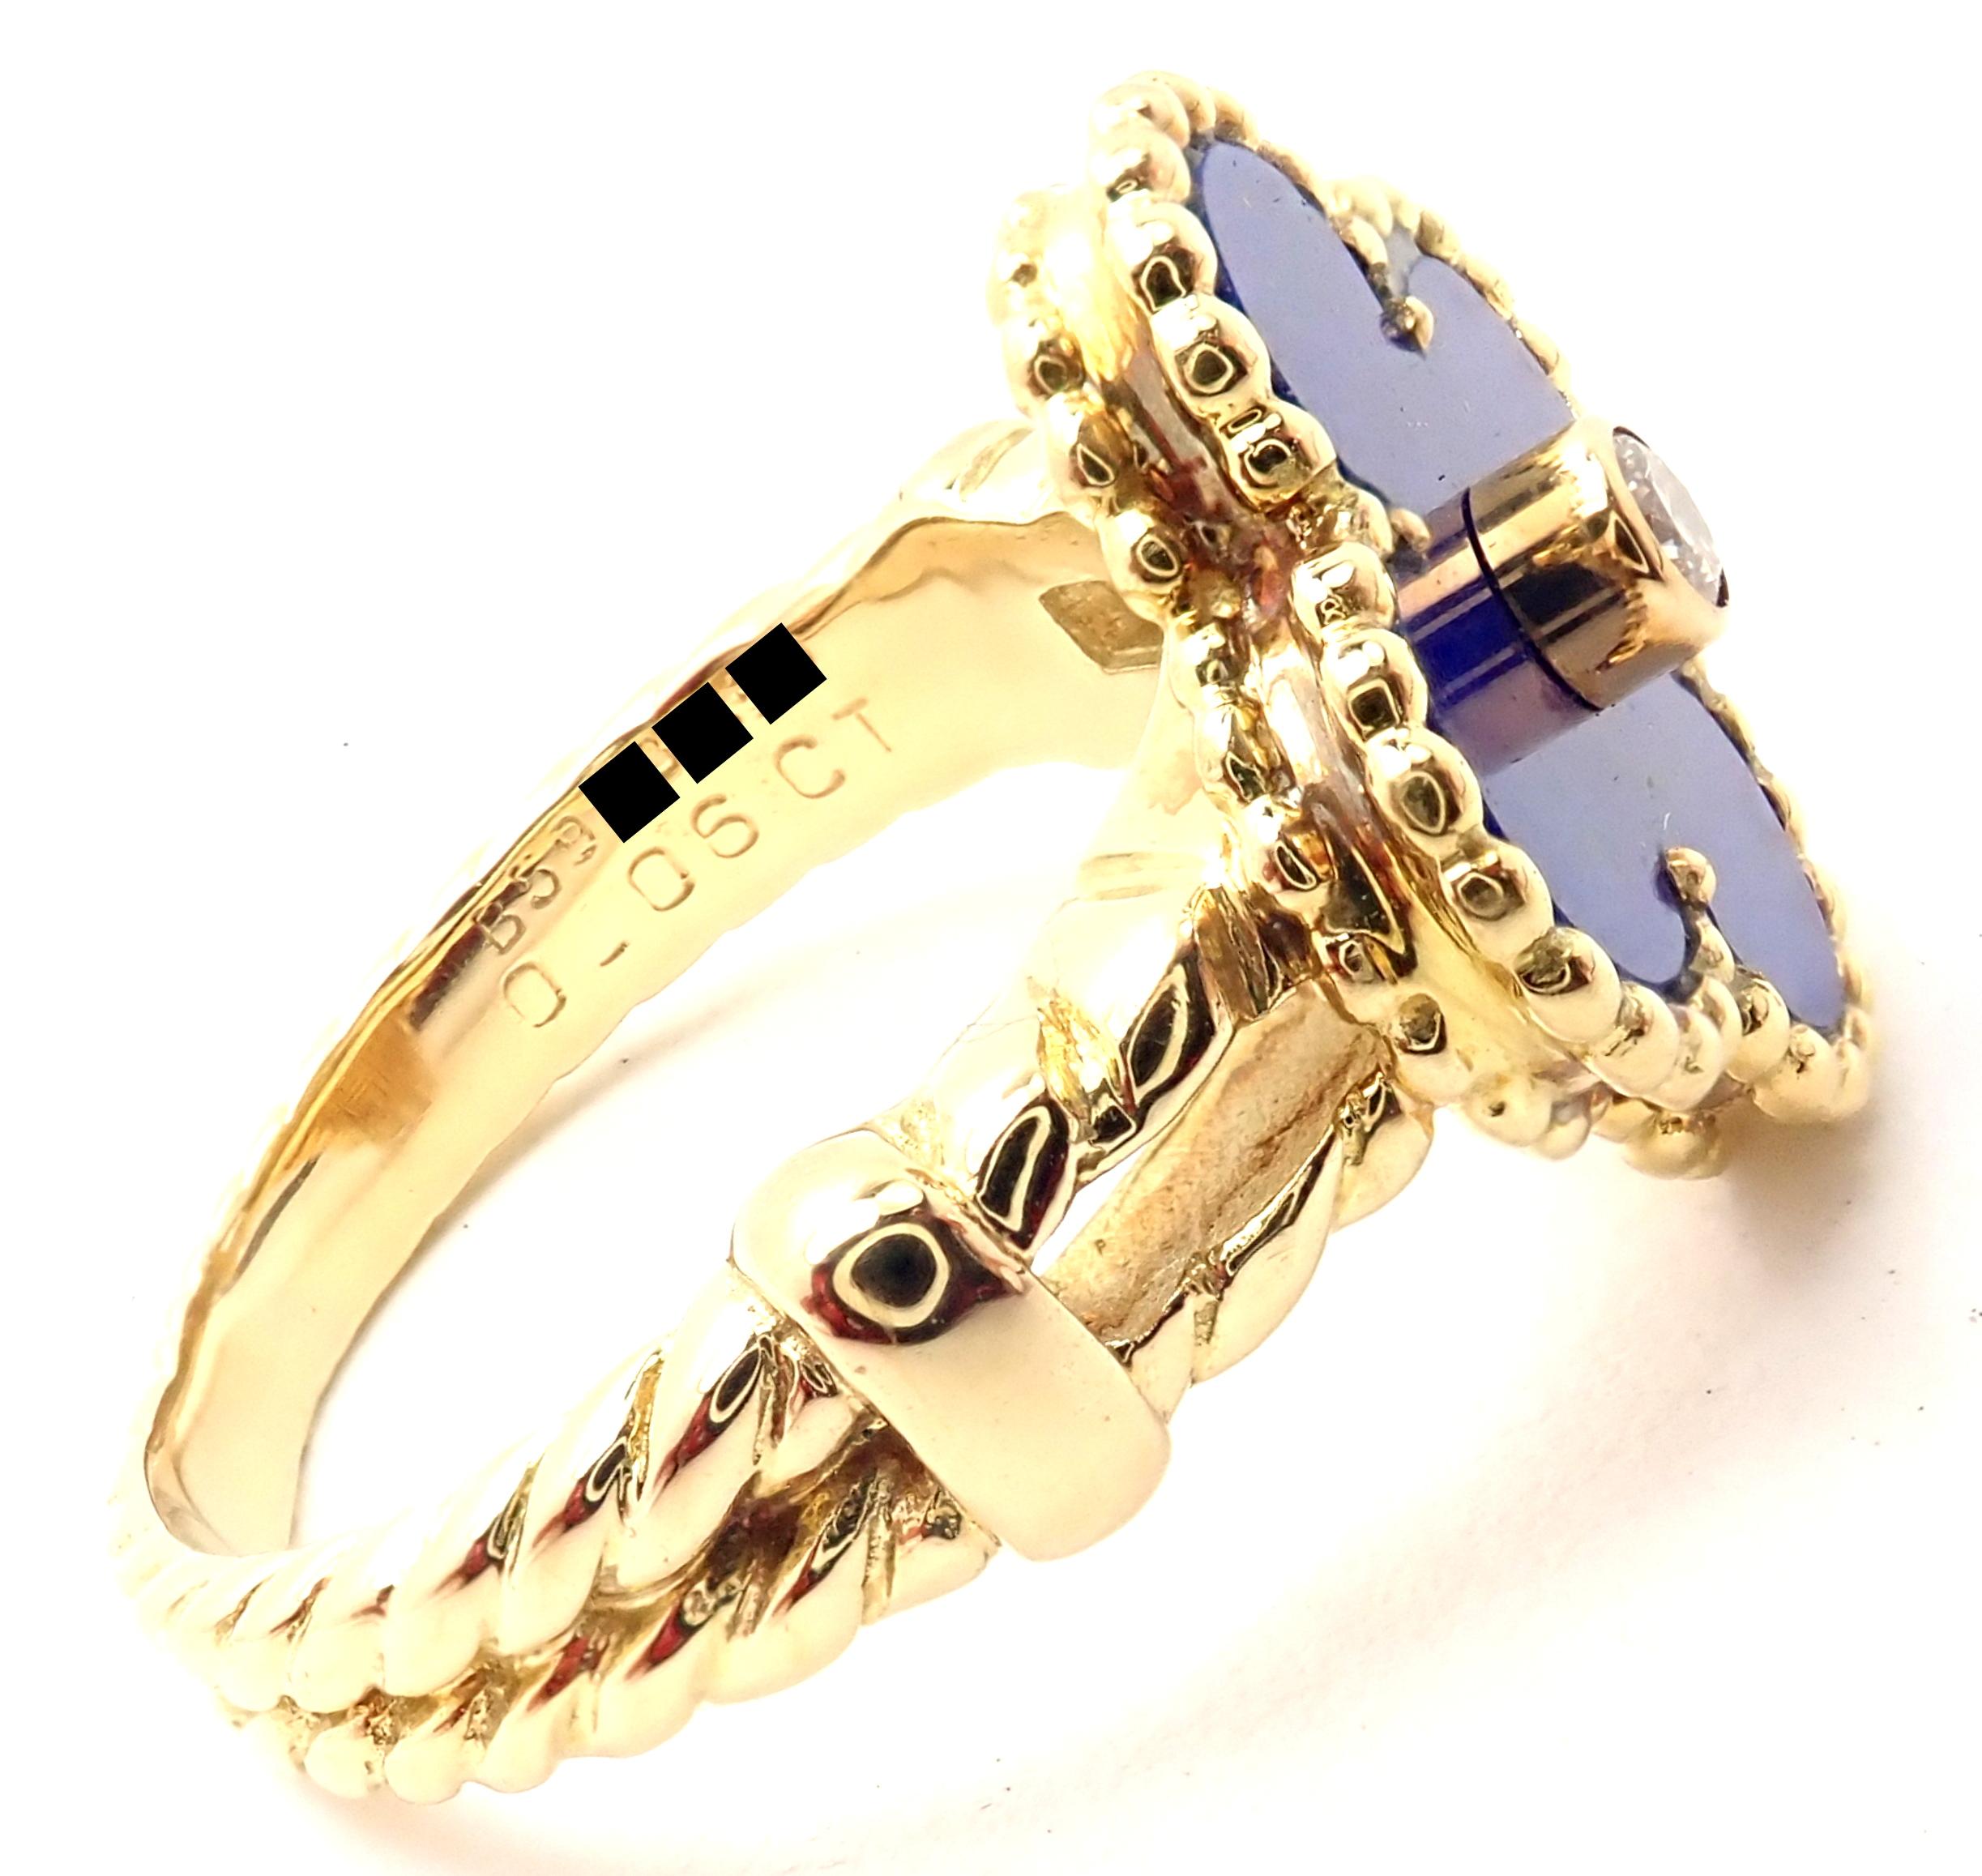 Van Cleef & Arpels Vintage Alhambra 18k Yellow Gold Diamond Lapis Lazuli Ring. 
With 1 Round brilliant cut diamond .06ct F/VS1 Alhambra cut lapis lazuli  15mm
Details: 
Size: 6
Width: 15mm 
Weight: 7.5 grams 
Stamped Hallmarks: VCA 18k